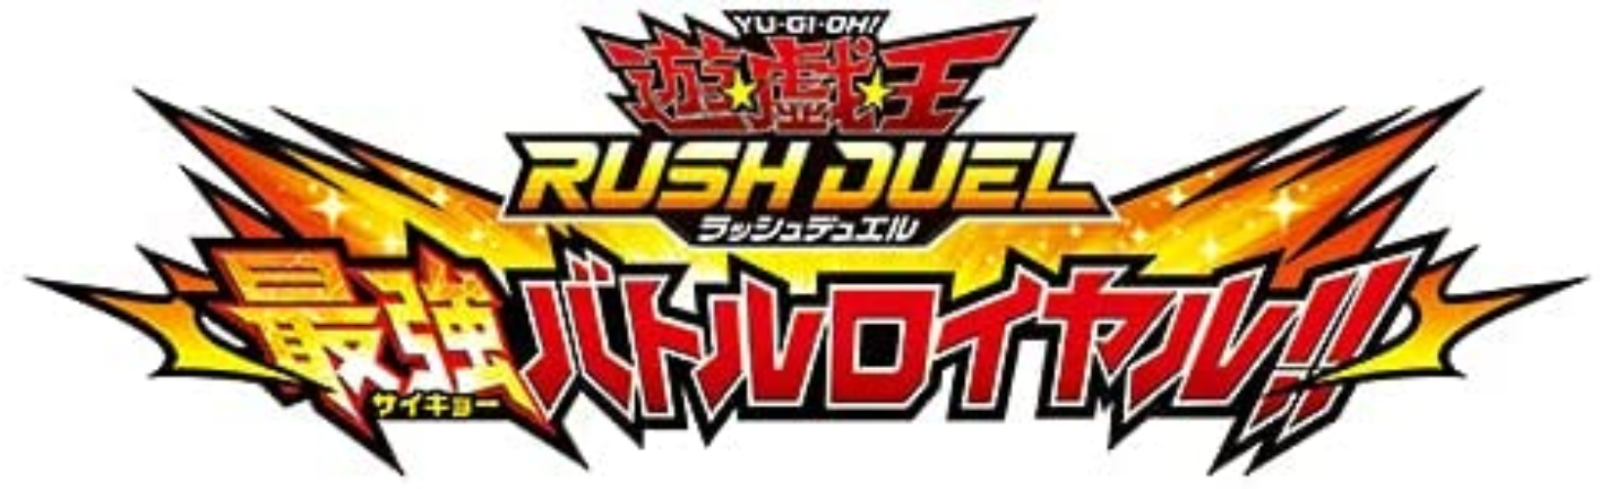 Nintendo Switch Yu-Gi-oh! Rush Duell stärkste Schlacht Royale mit 3Kards Japan